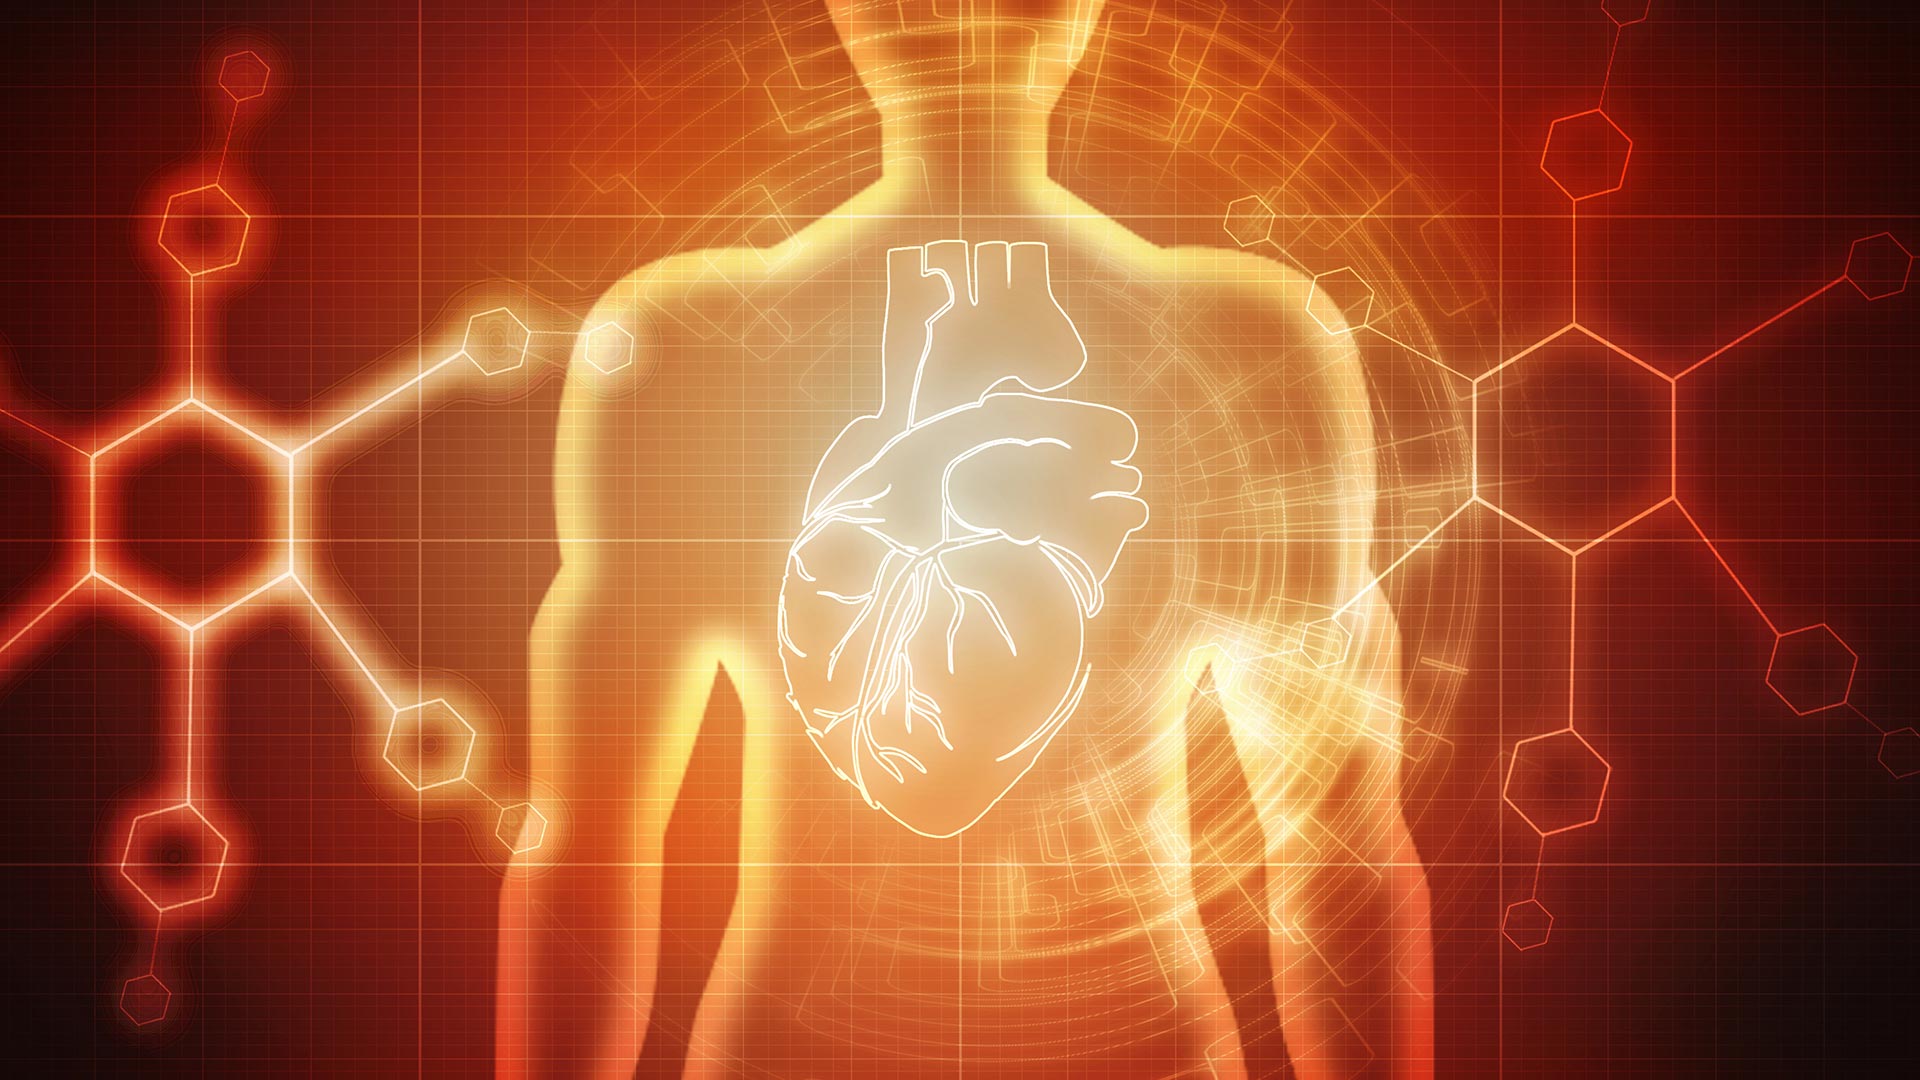  A digital illustration of a human heart